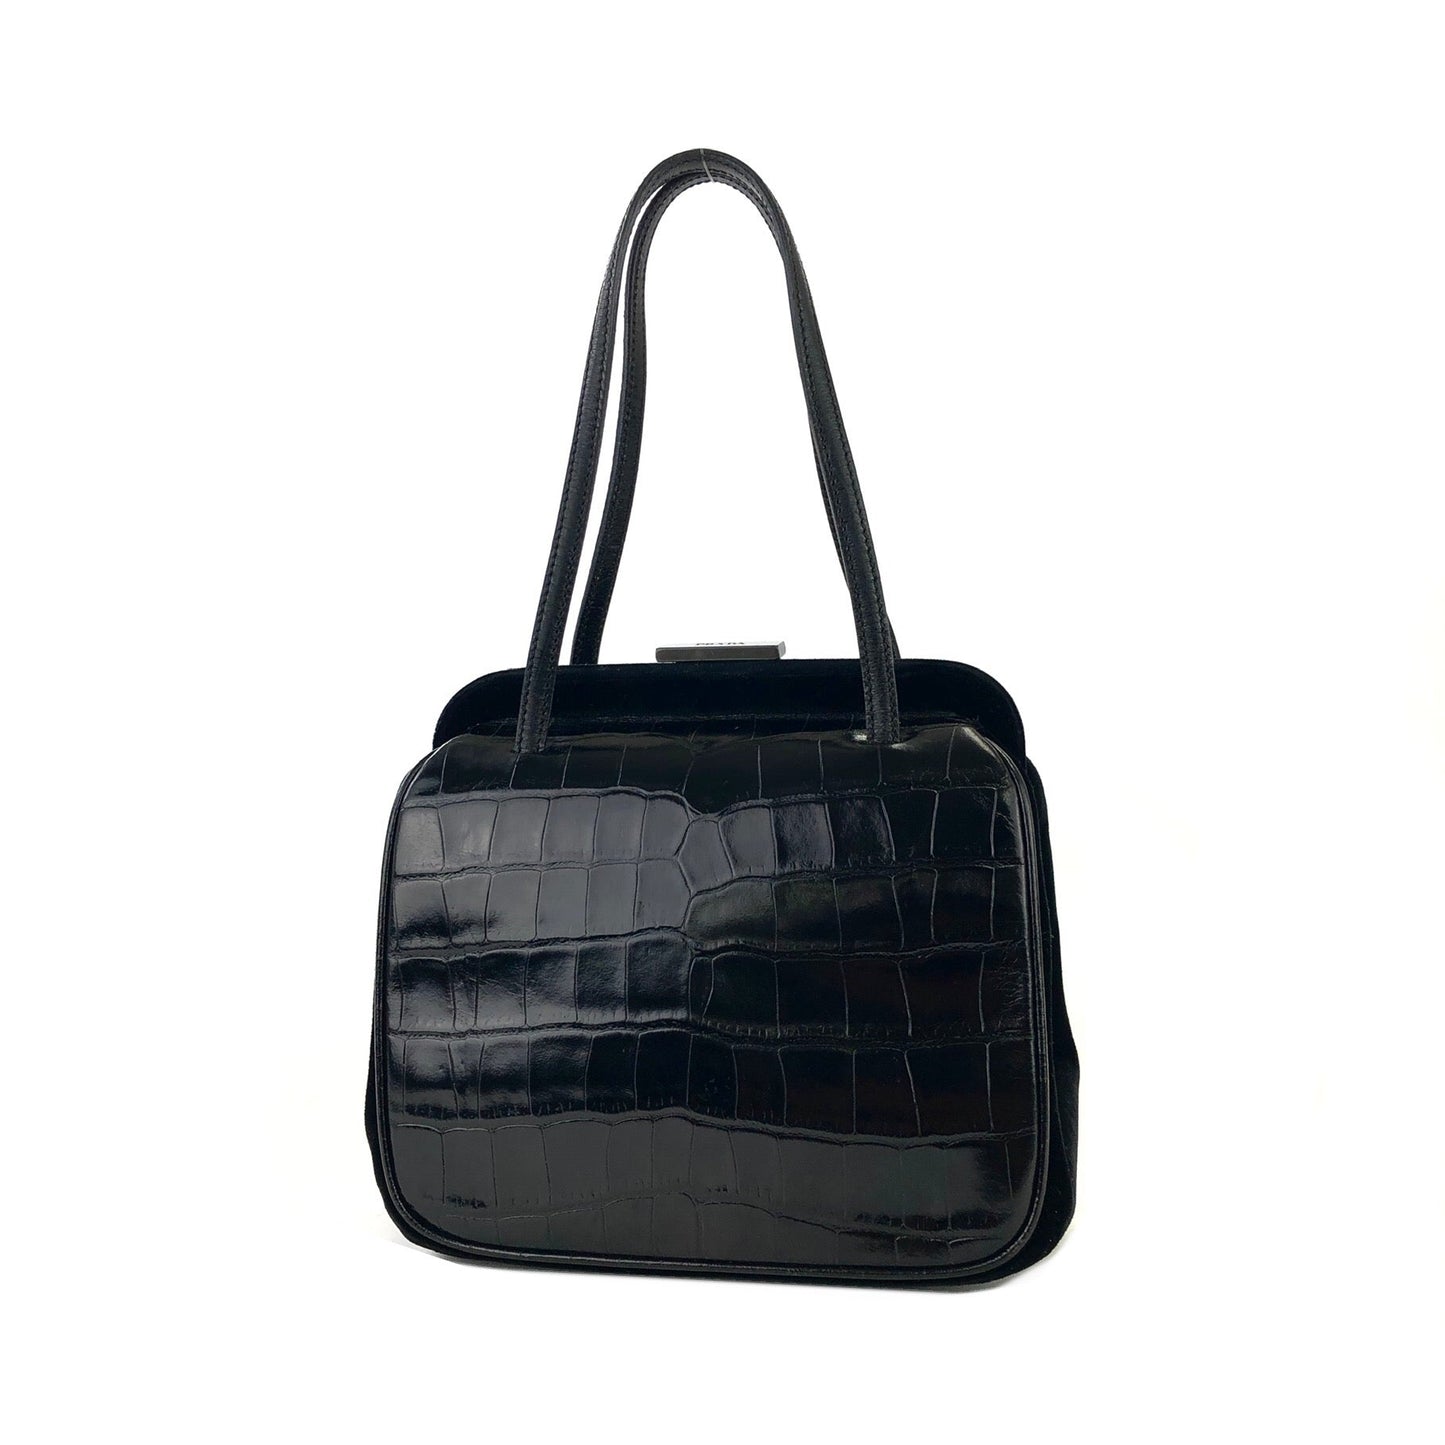 PRADA Crocodile emboss Leather Velour Purse bag Handbag Black Vintage sx2vcj